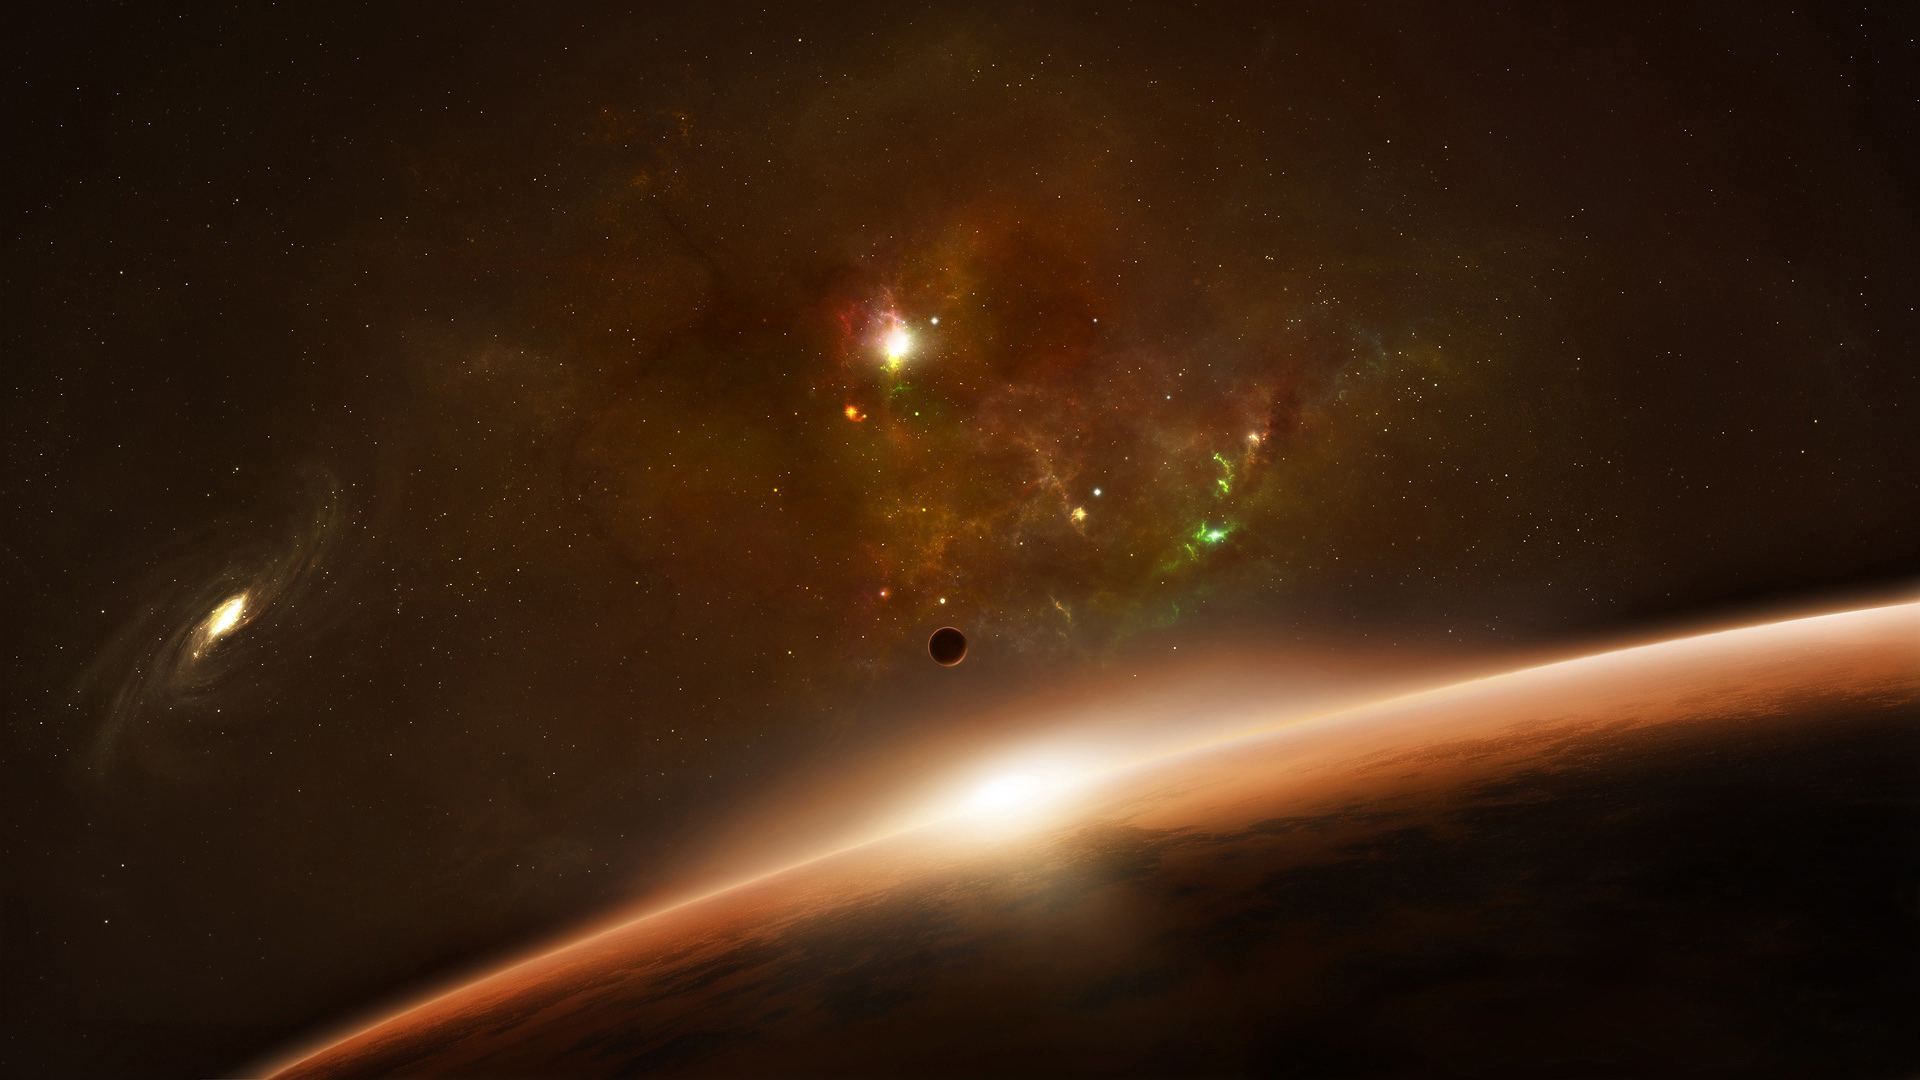 sunrise, outer space, planets - desktop wallpaper